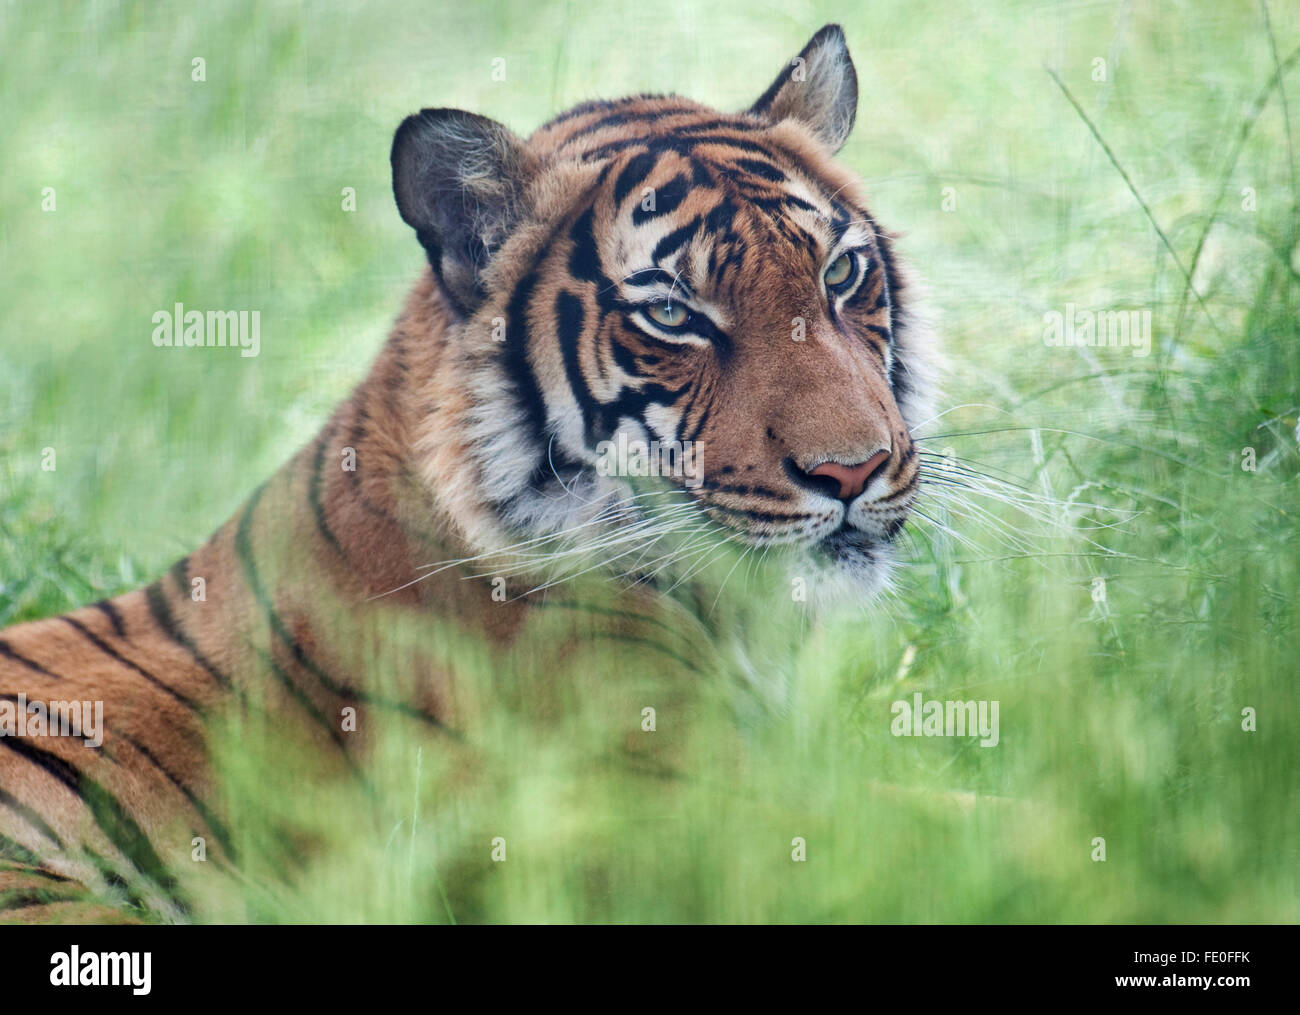 Malaya, Tigre Panthera tigris jacksoni, Foto de stock